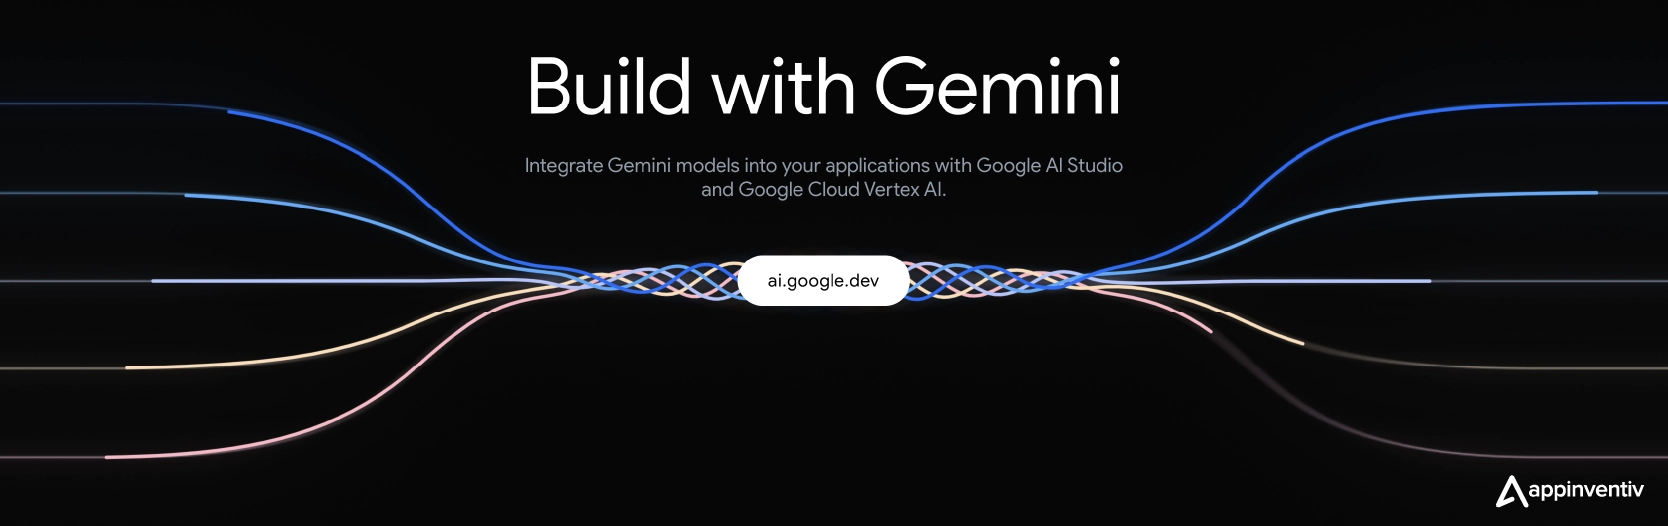 Integrate Gemini into Apps with Google AI Studio